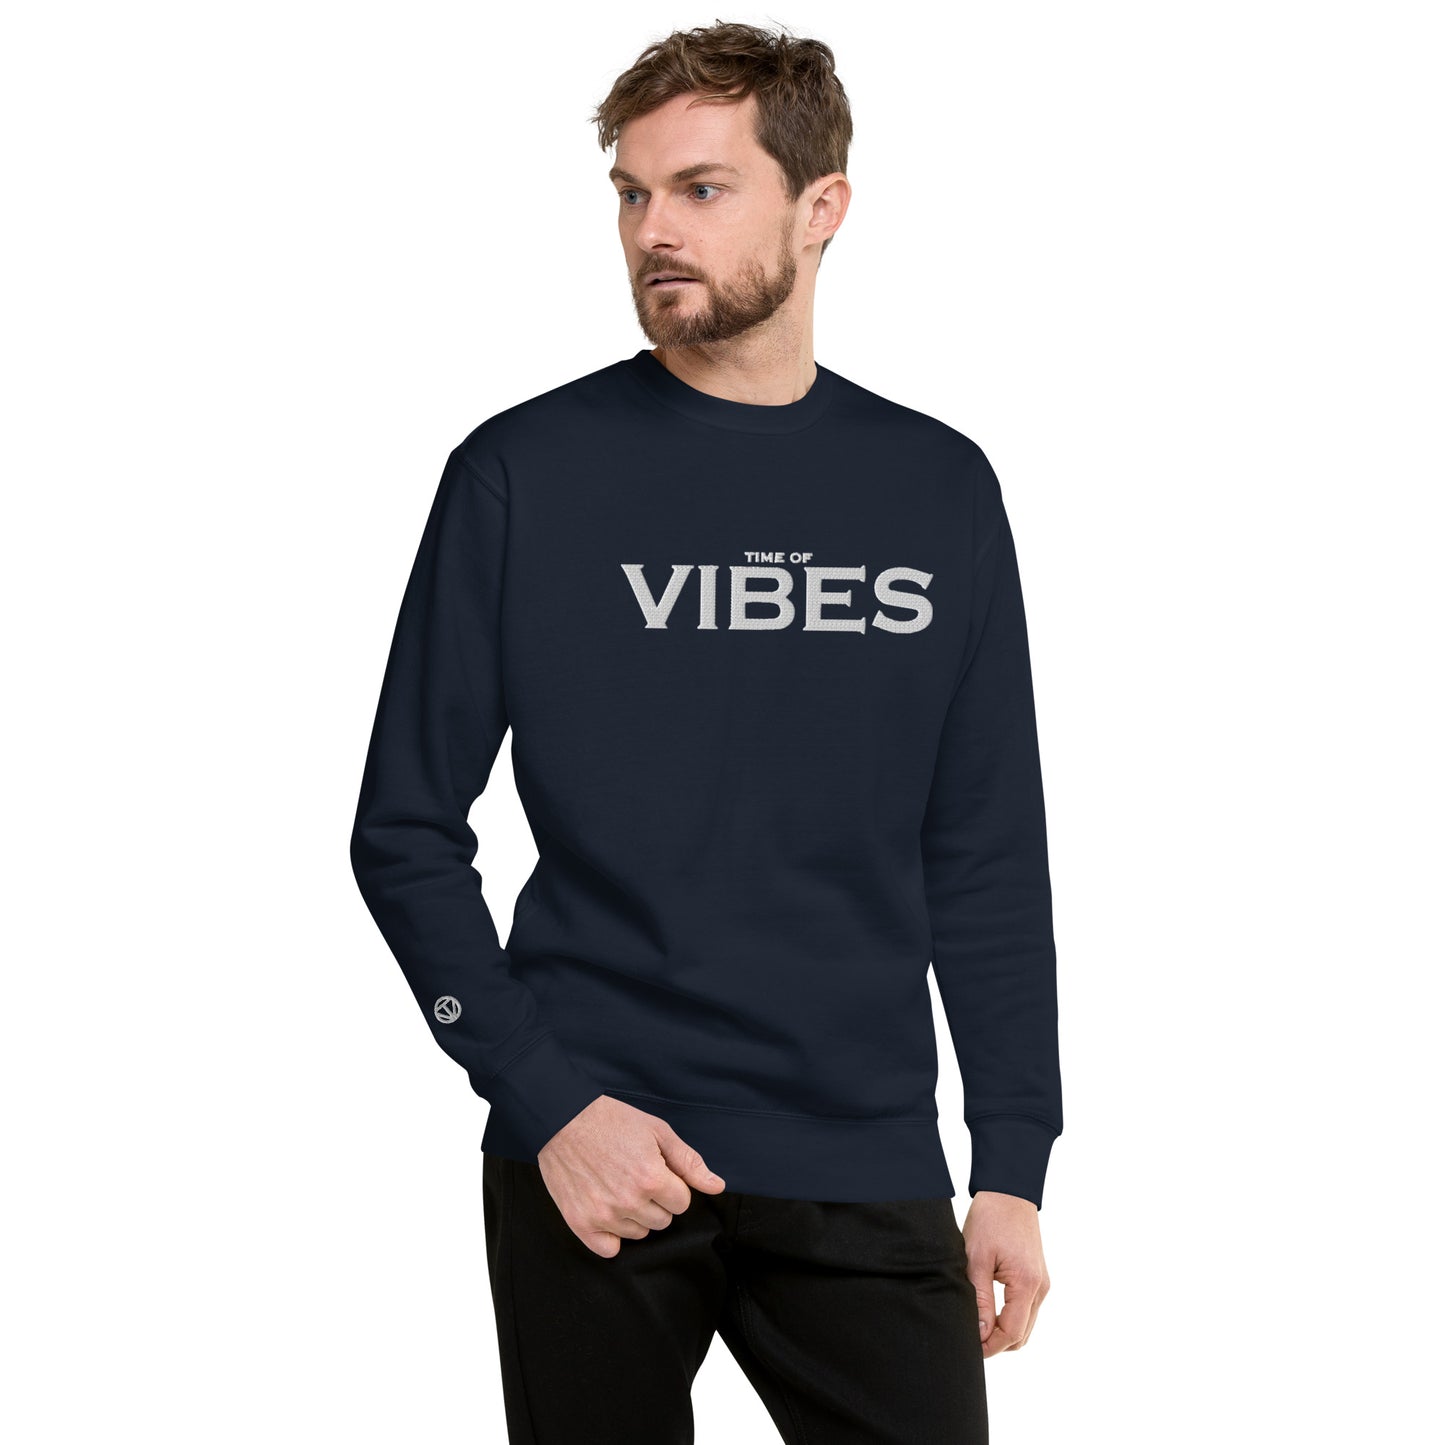 TIME OF VIBES - Premium Sweatshirt VIBES (Navy/White) - €59.00